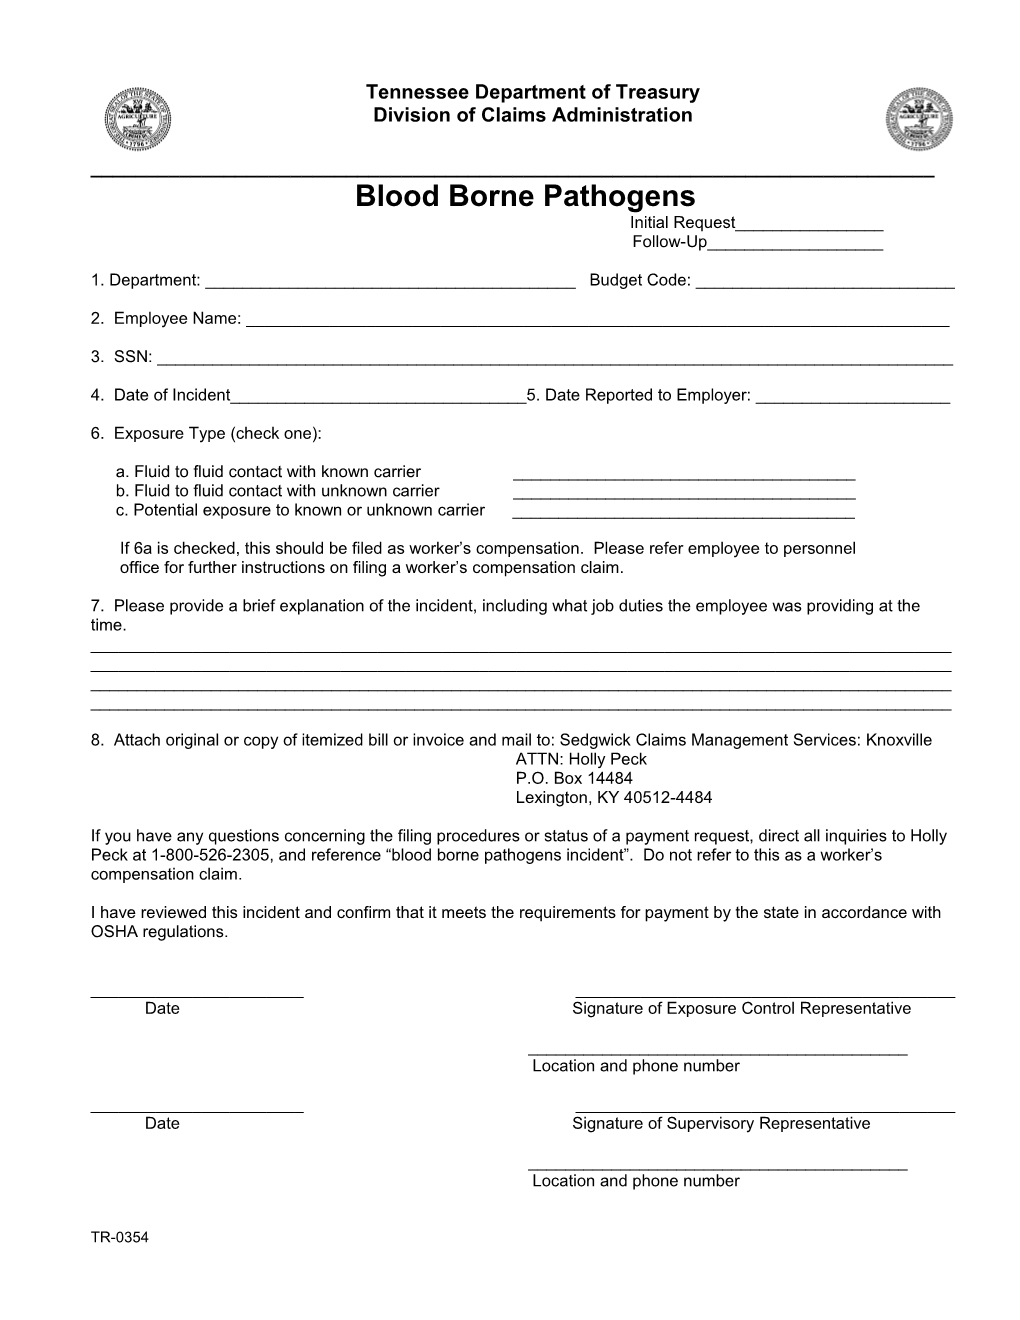 Blood Borne Pathogens s1